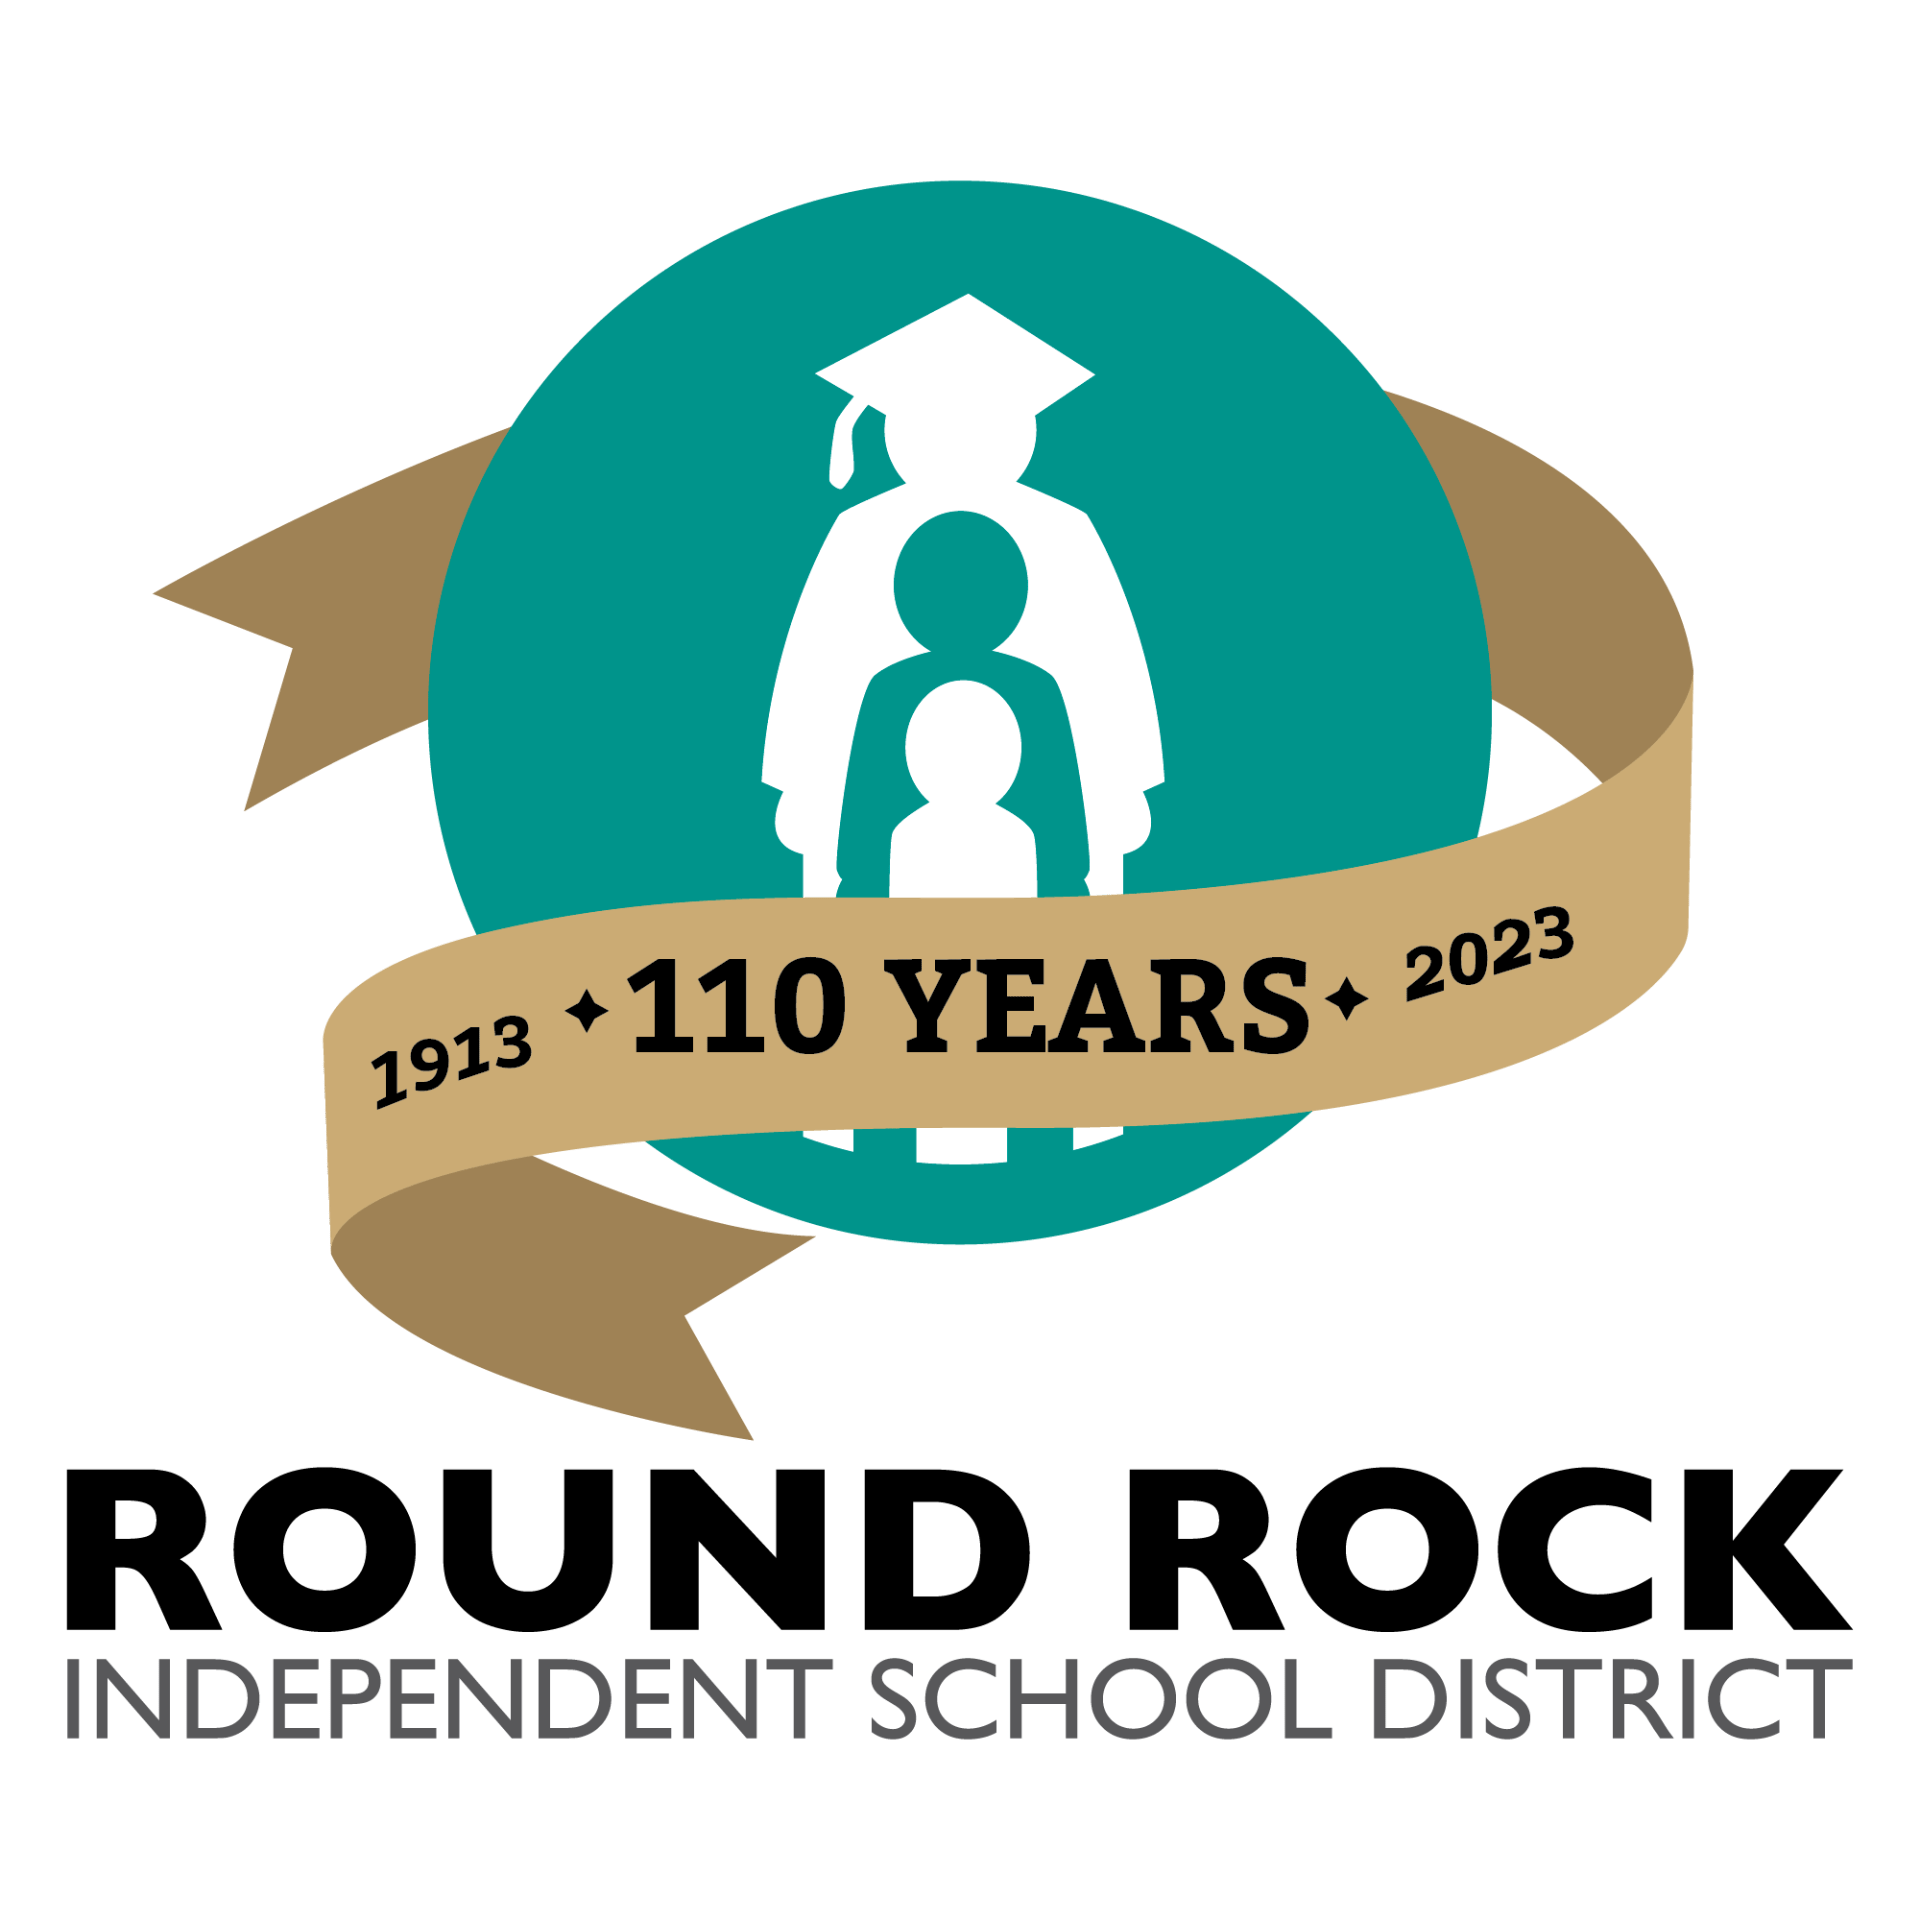 Round Rock ISD 100 year logo. 1913 to 2023.